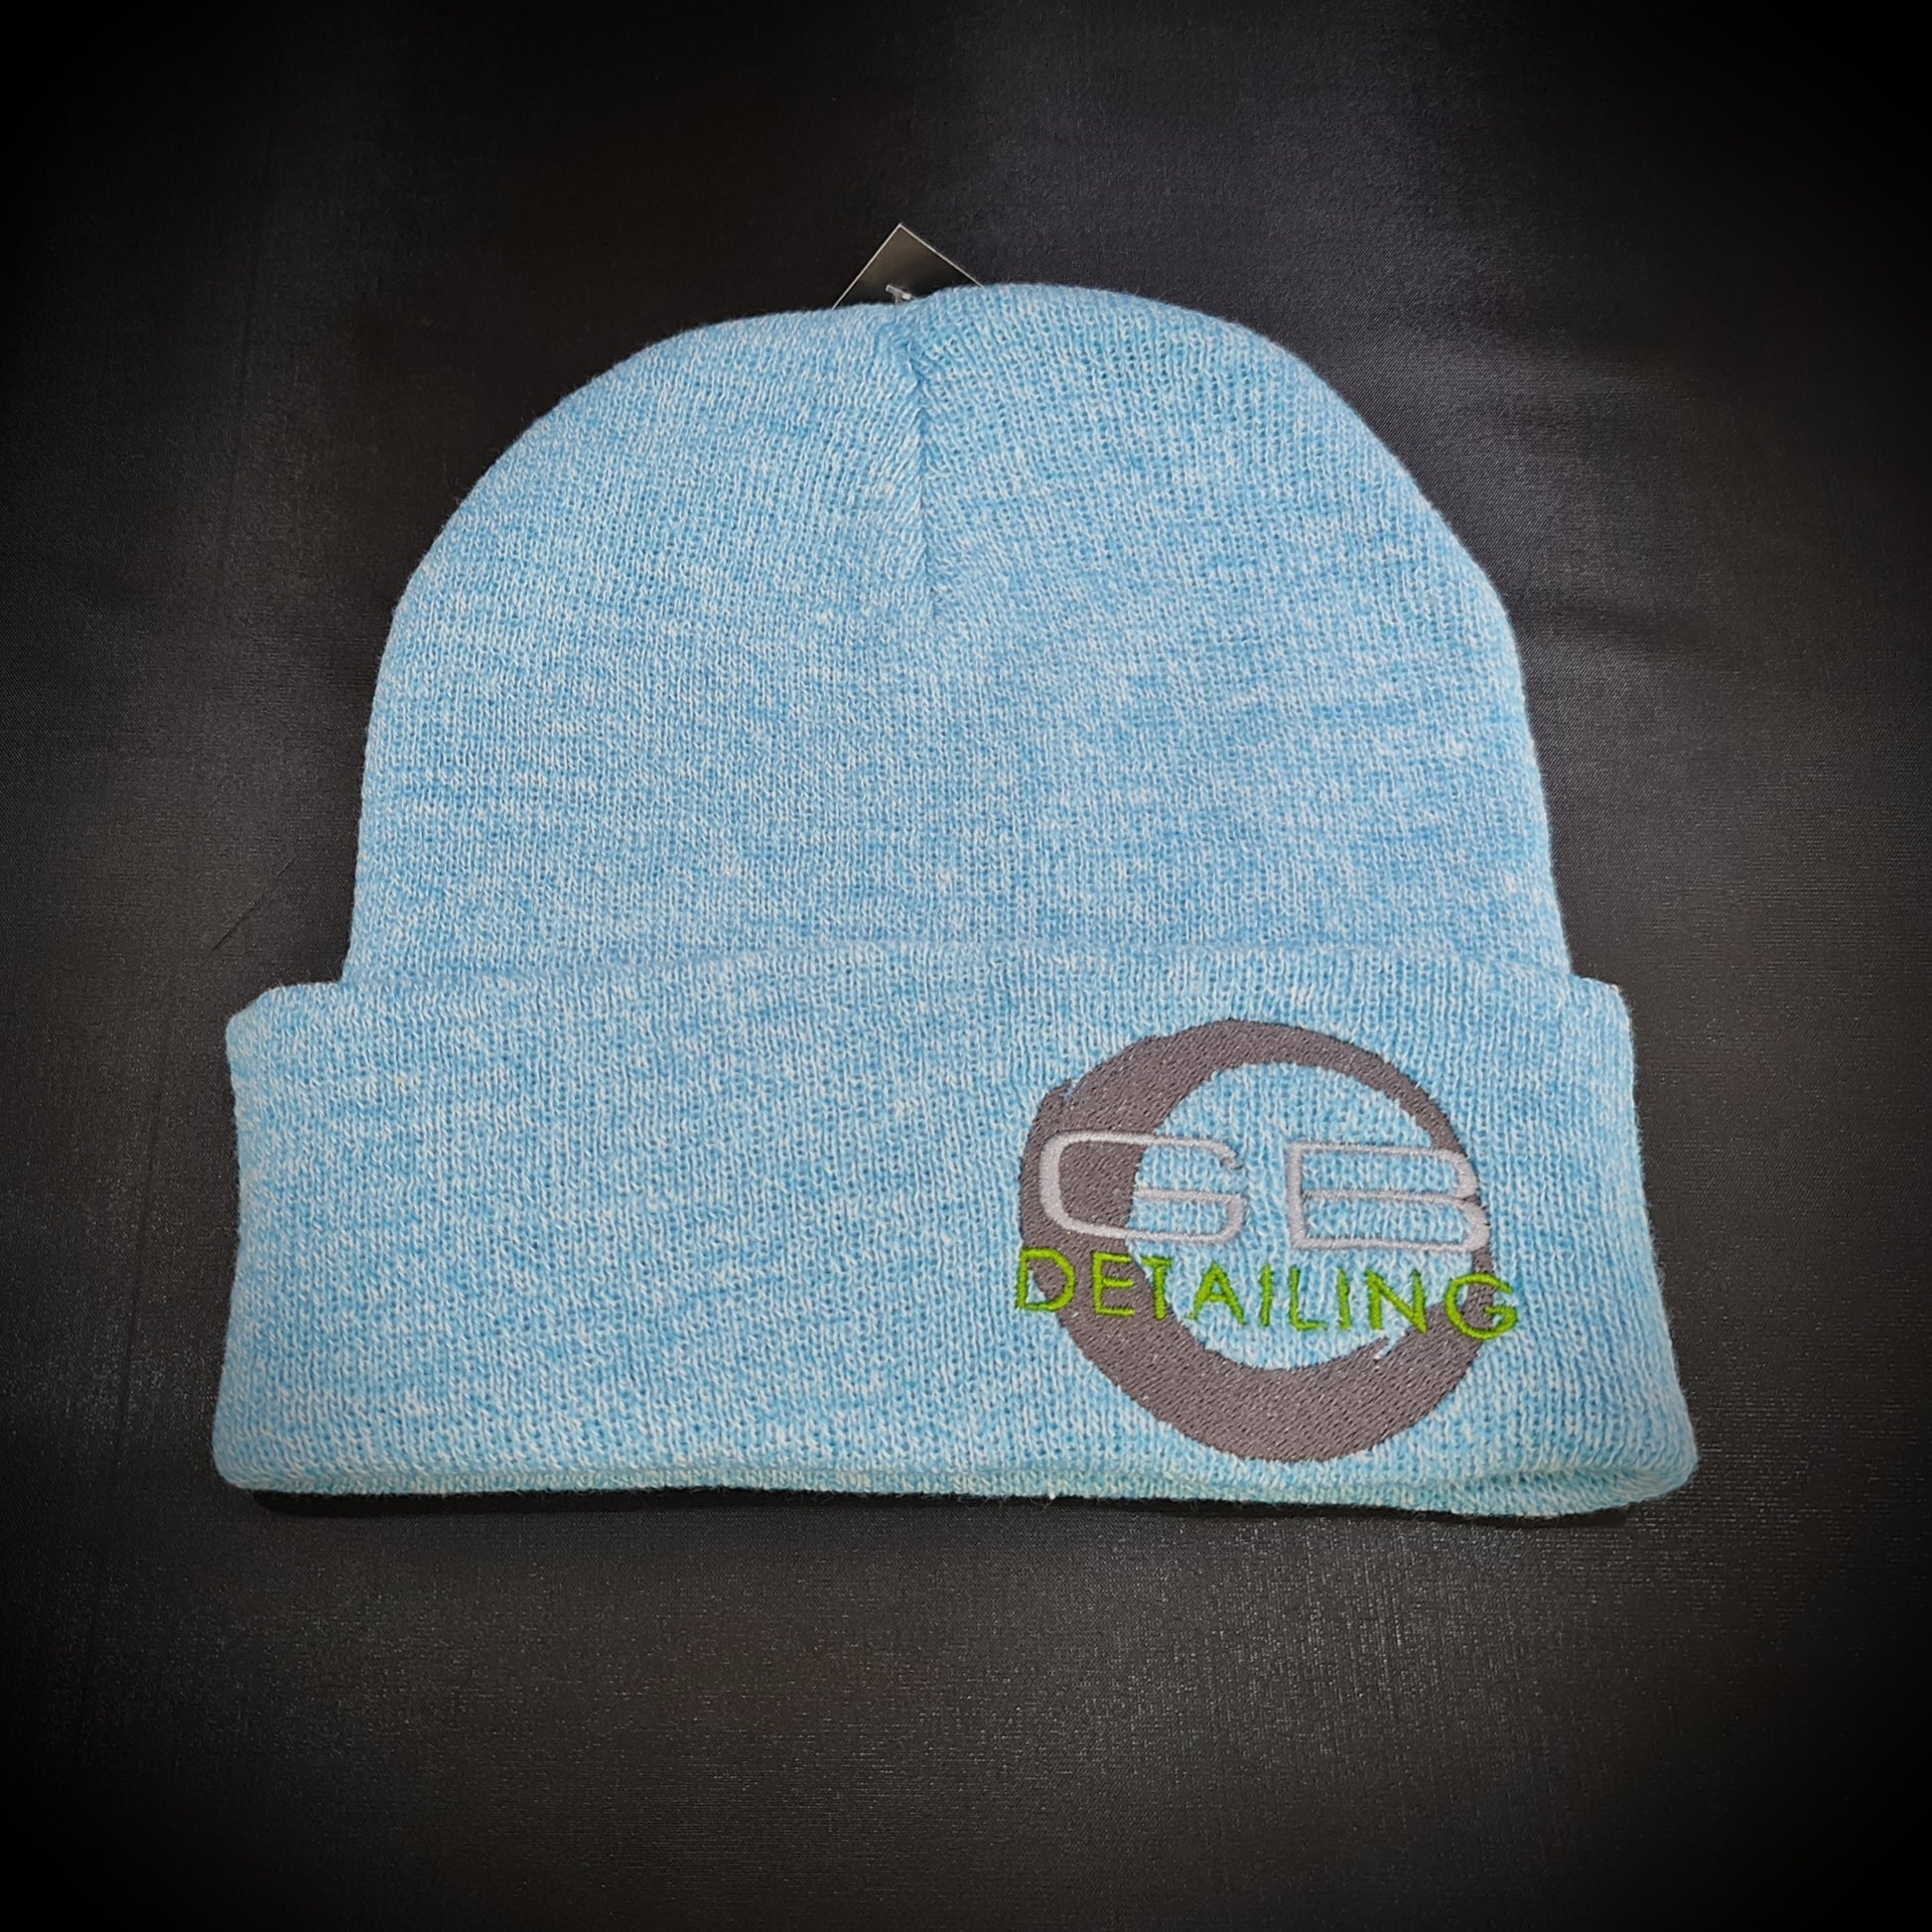 GB Detailing beanie hat light blue mix